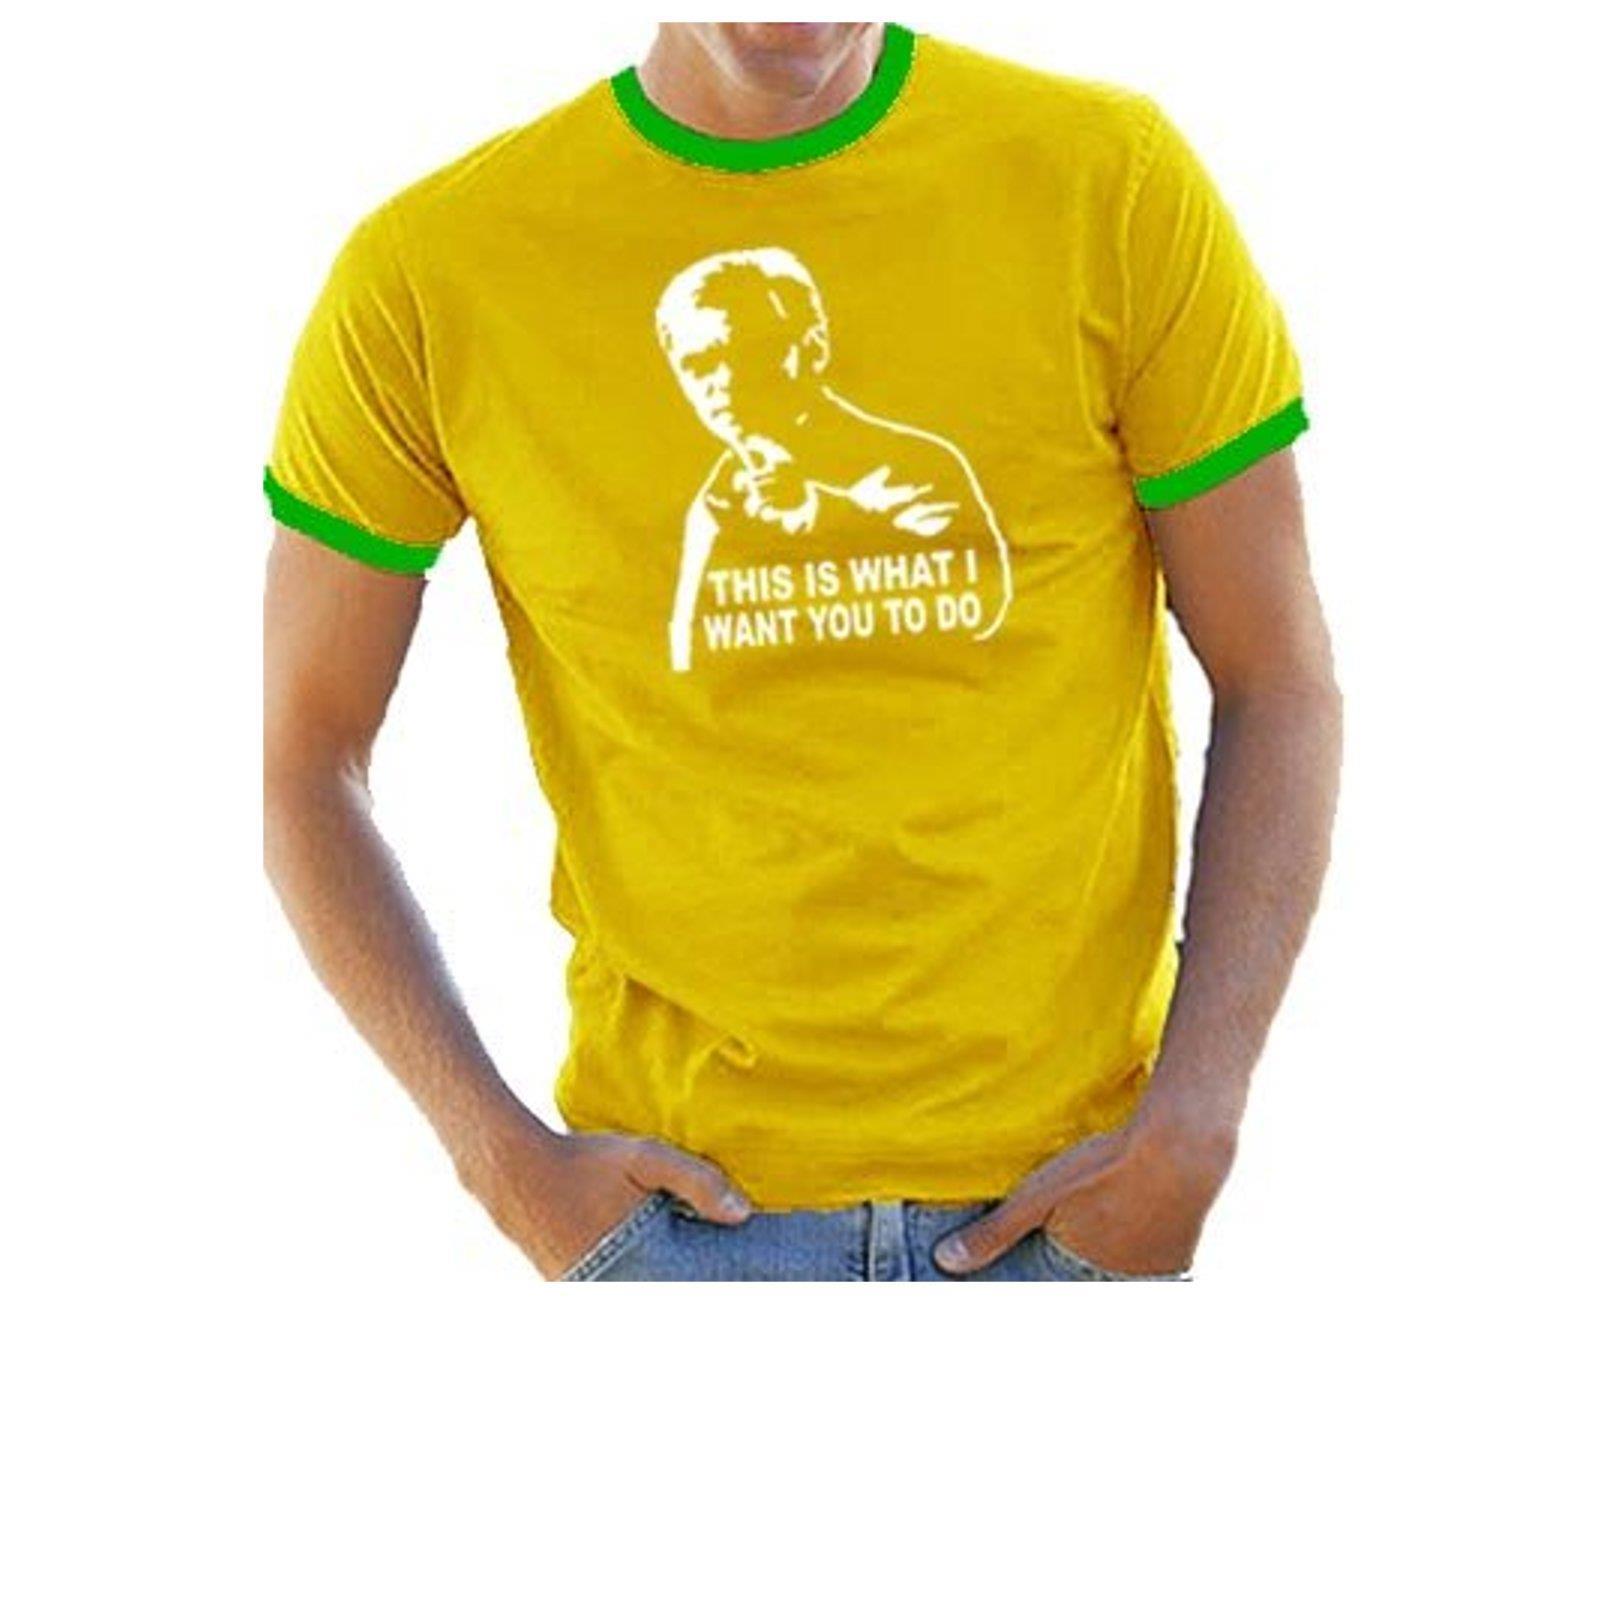 Horatio Caine Herren Oberteil Shirt Kurzarm Top Männer Rundhals T-Shirt CSI